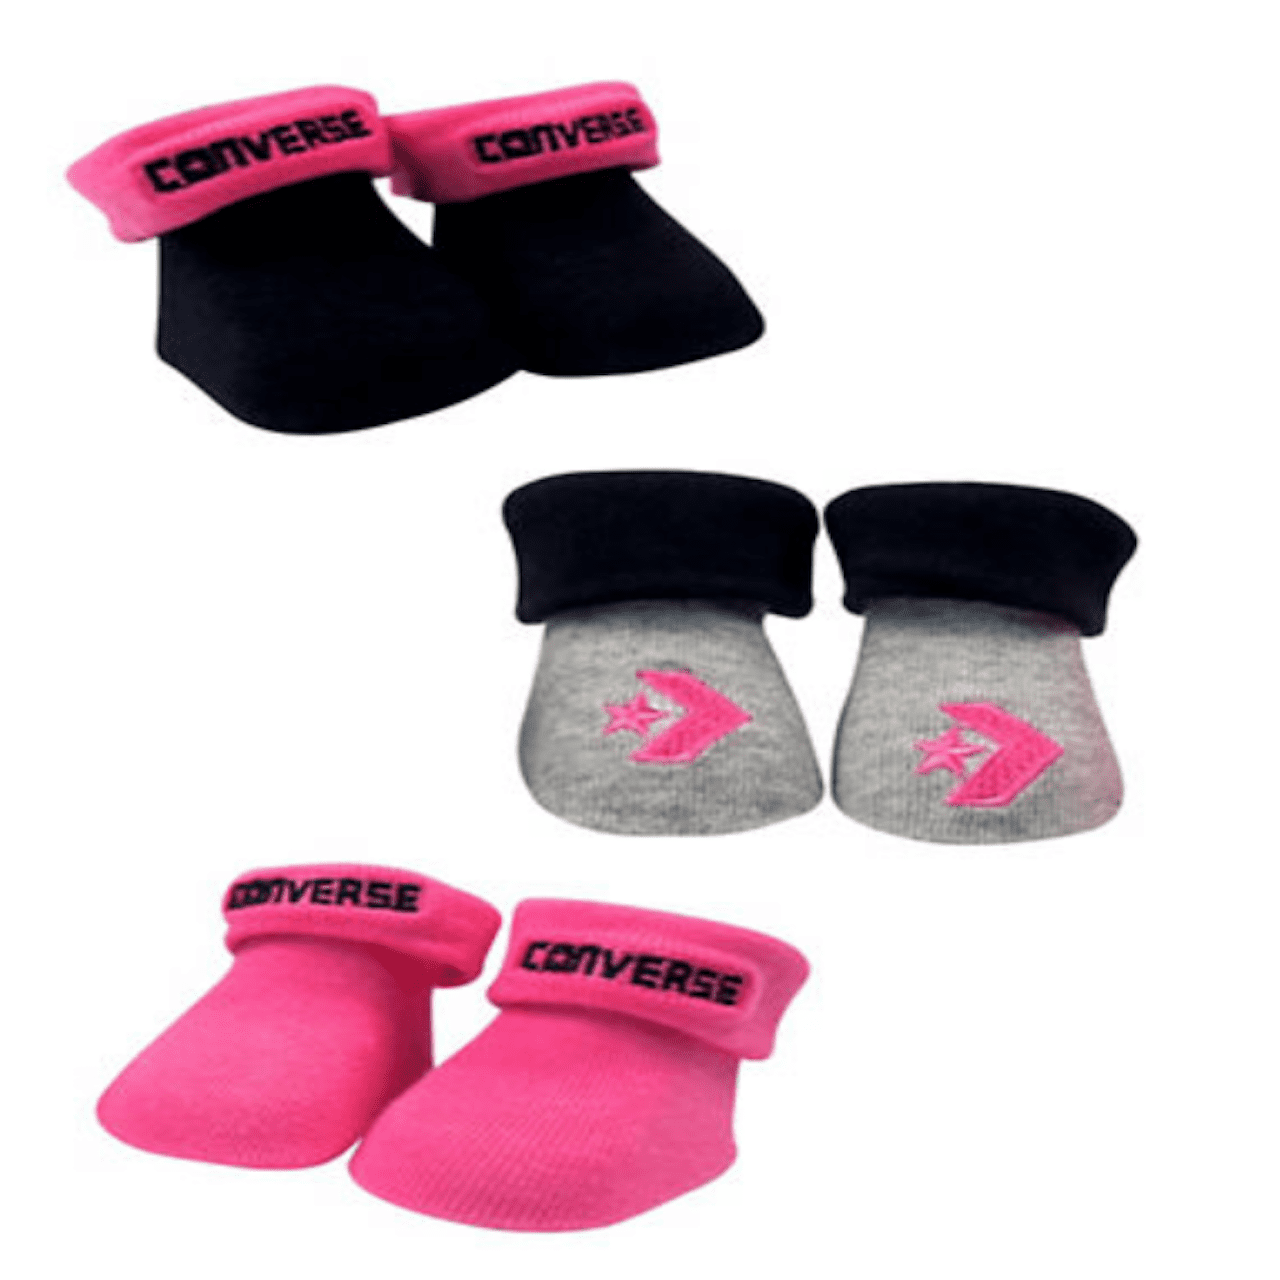 converse baby socks 3 pack